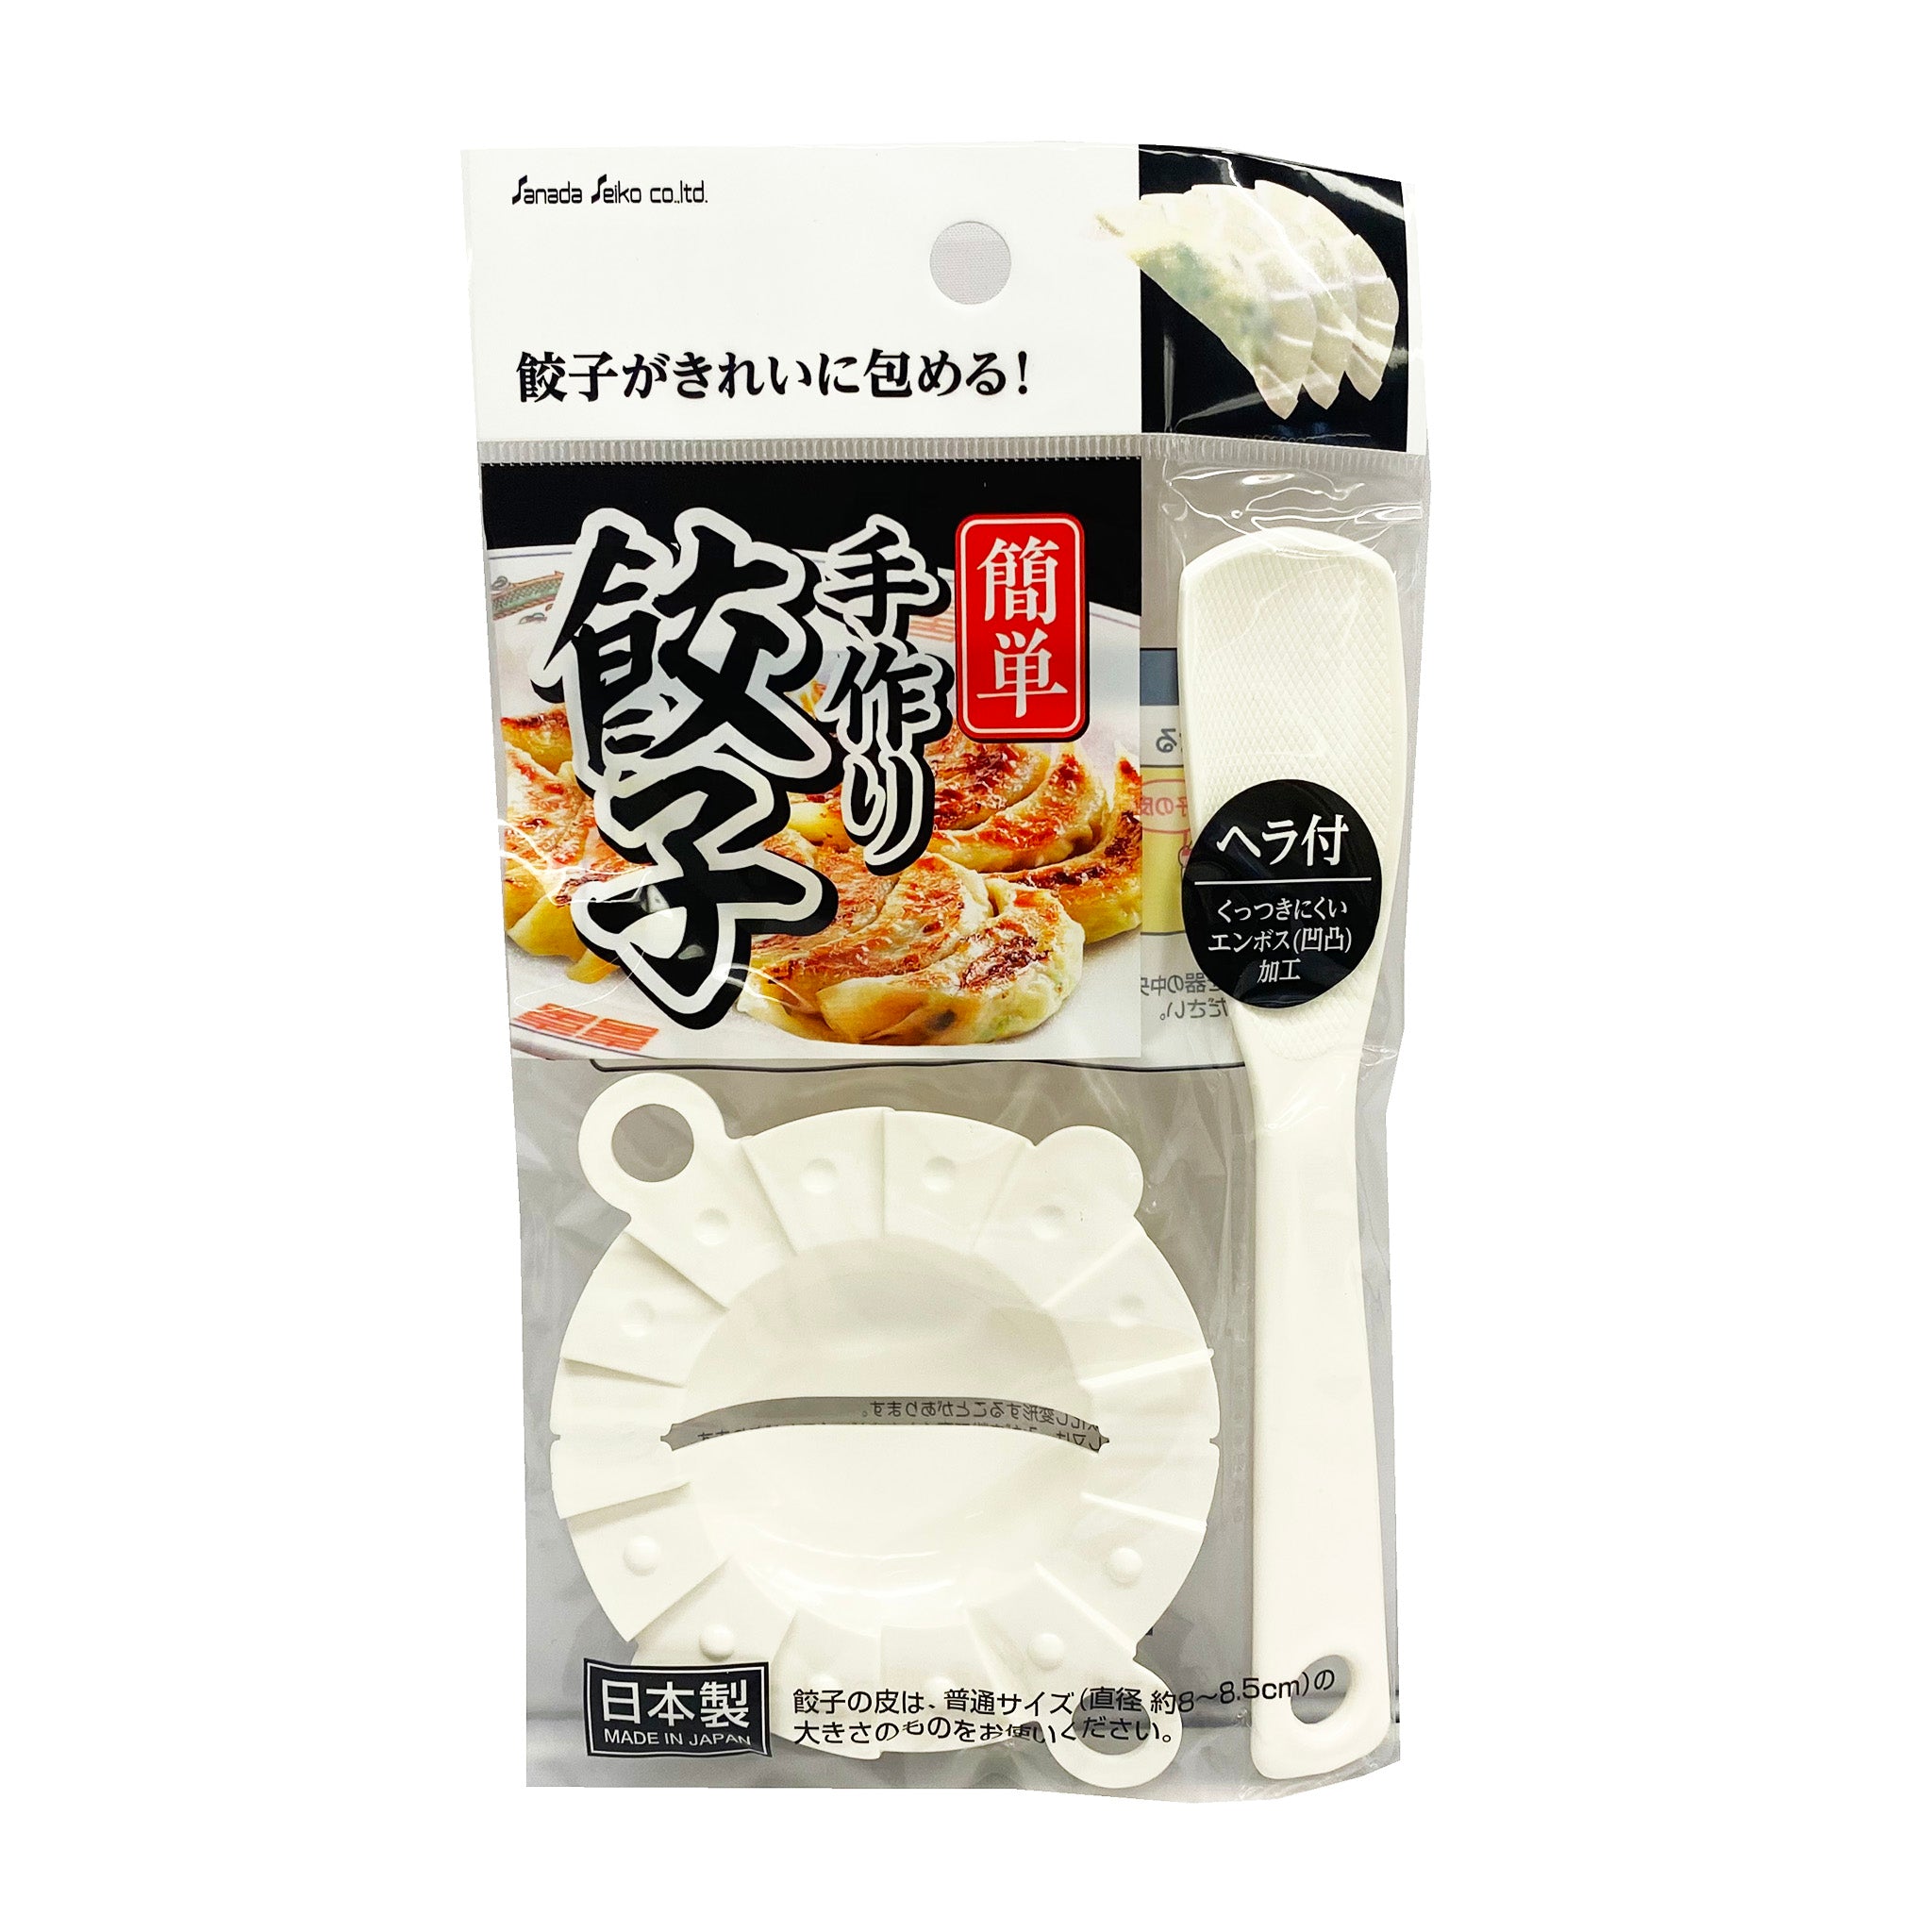 Sanada Seiko Dumpling Maker - Just Asian Food